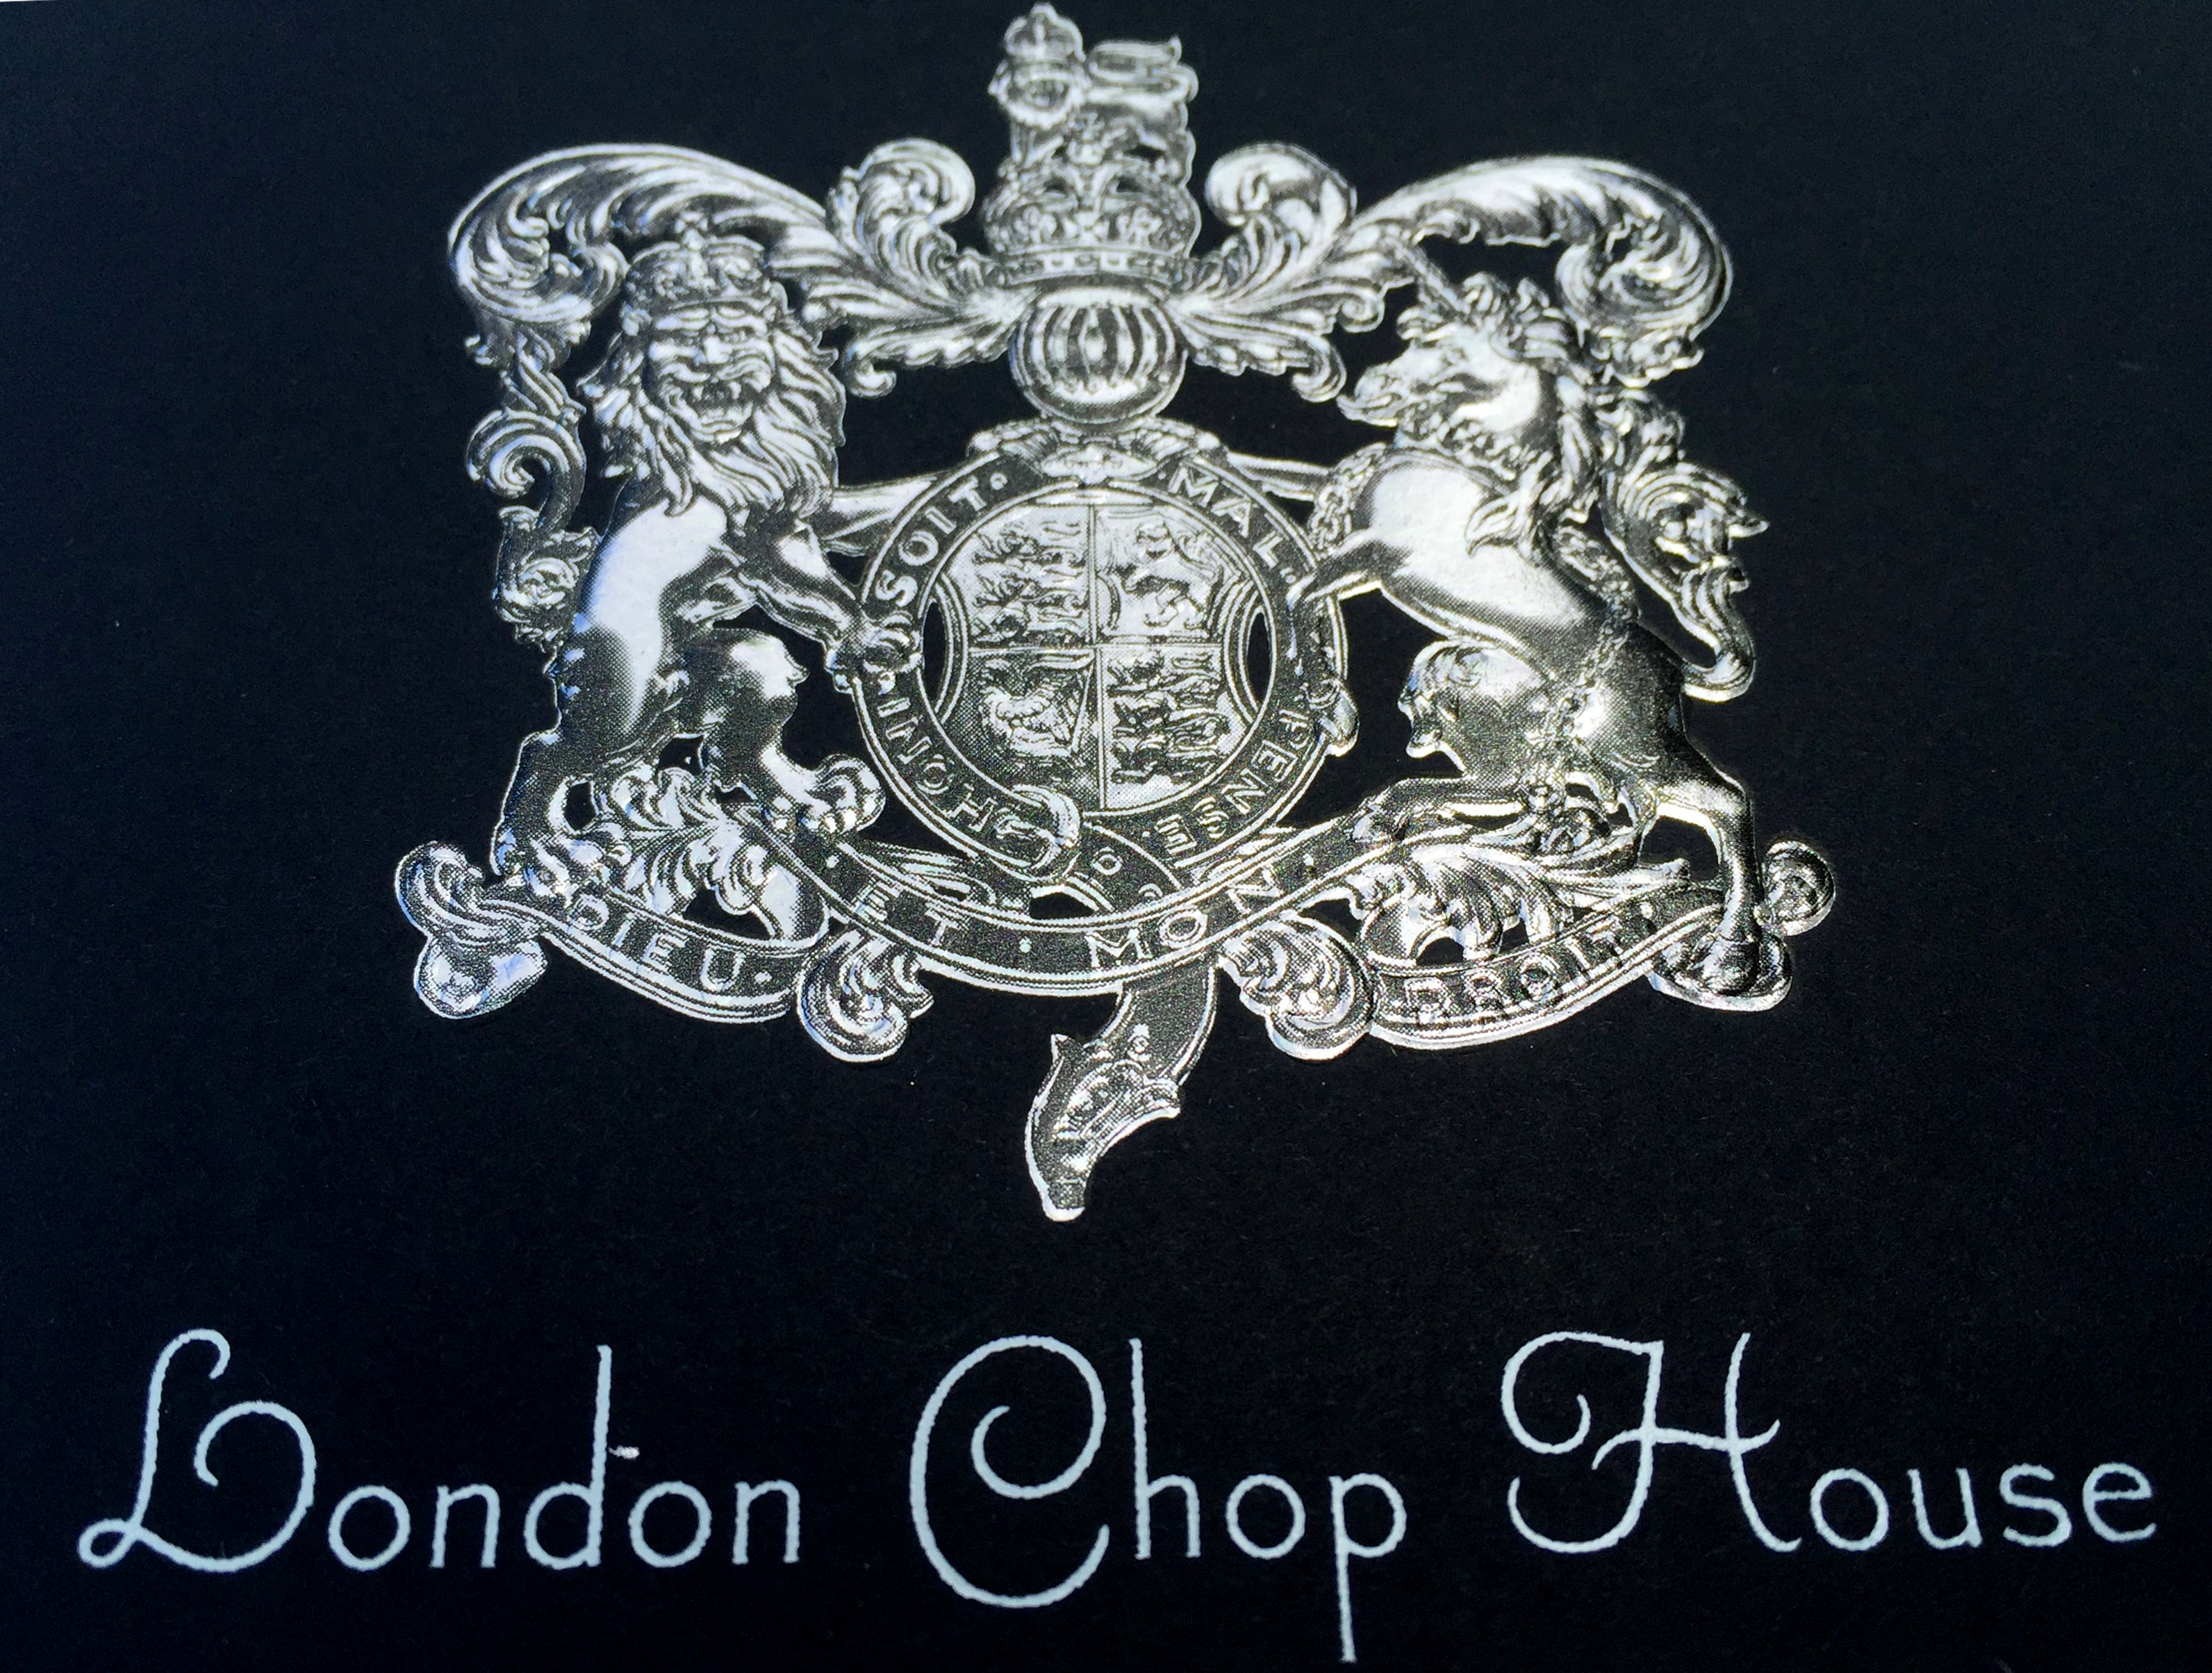 Embossed foil stamp for London Chop House menu.